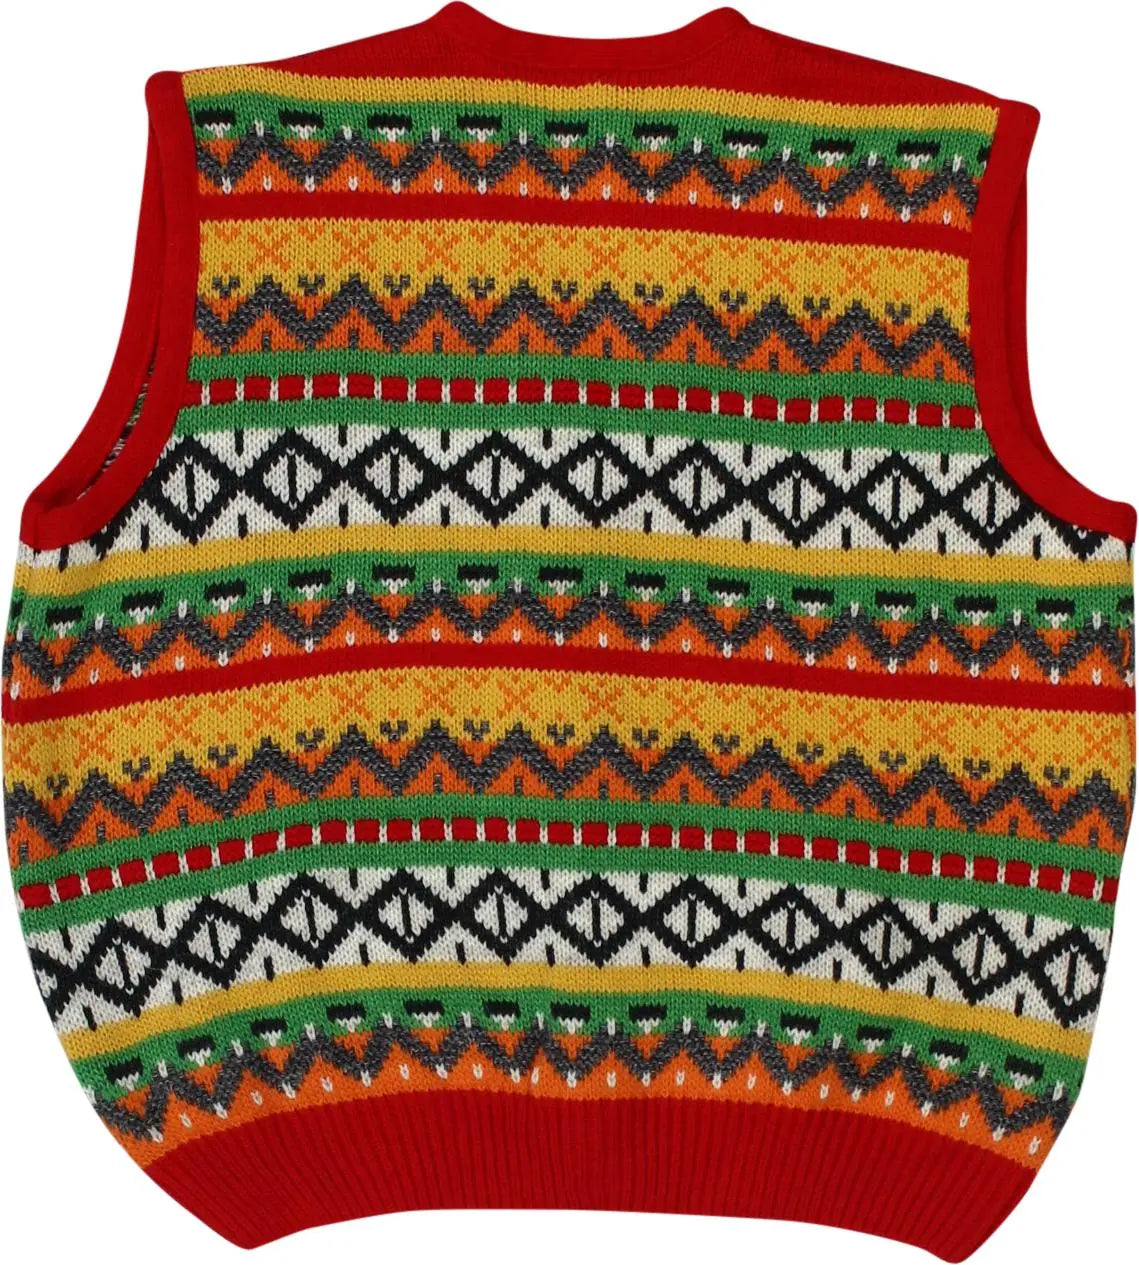 Ellepi - Colourful Knitted Vest- ThriftTale.com - Vintage and second handclothing